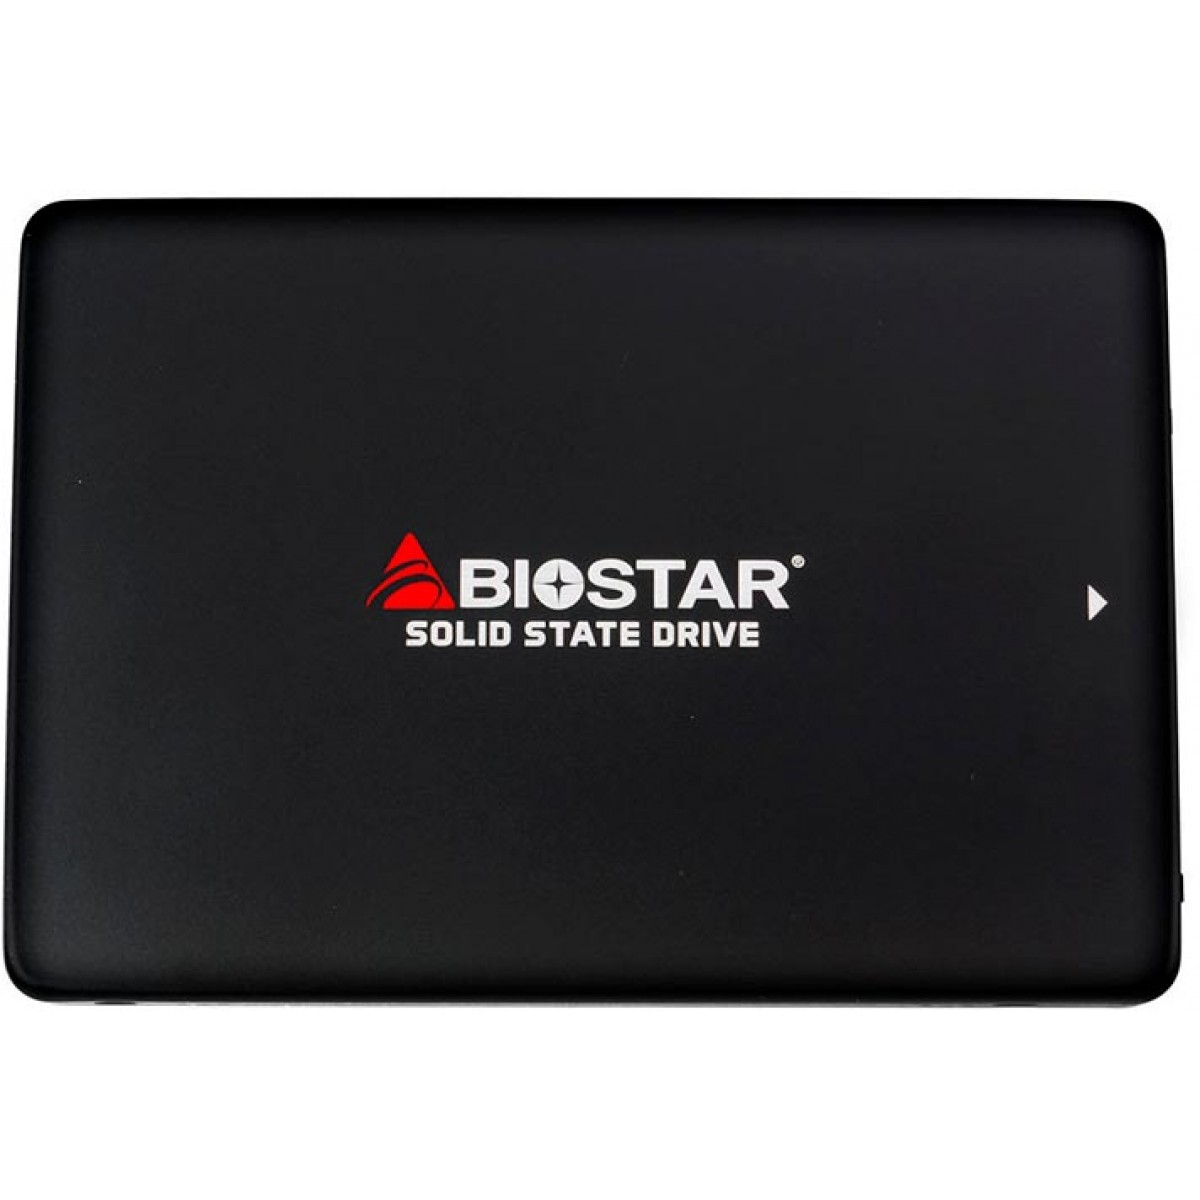 SSD Biostar S120 512GB, Sata III, Leitura 550MBs Gravação 525MBs, SA902S2E35-PM1BK-BS2